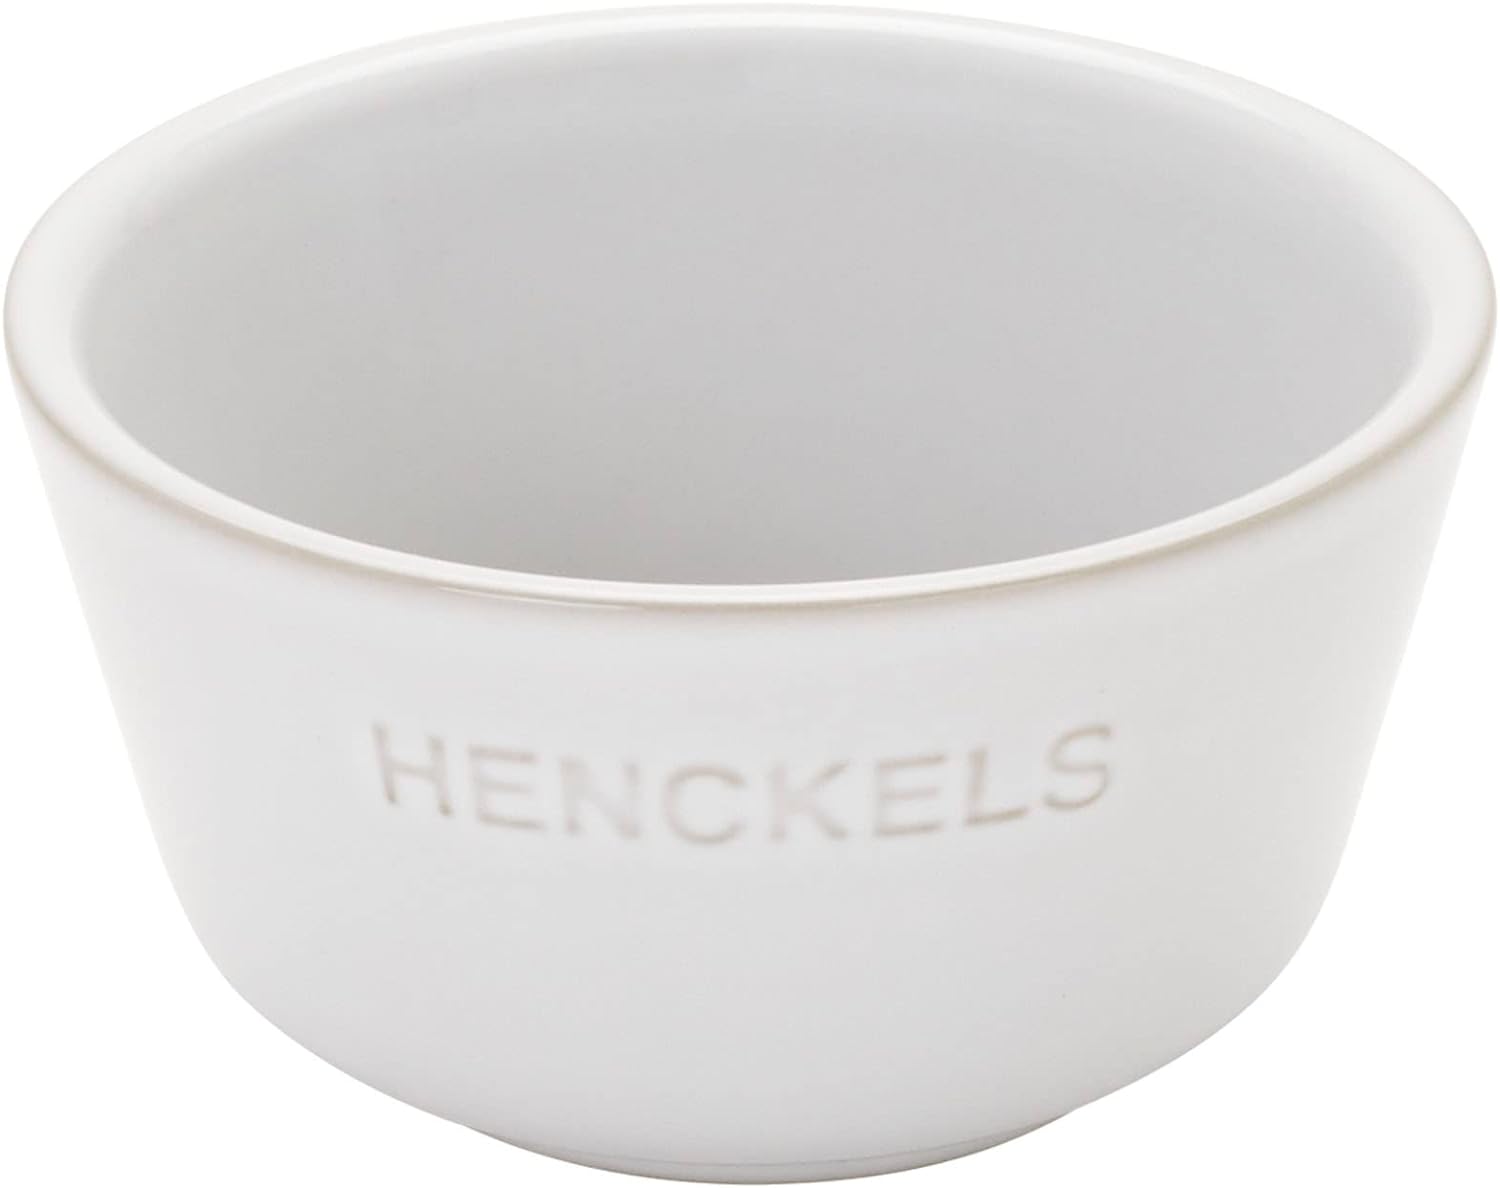 HENCKELS Ceramics 8-pc Mixed Bakeware, White